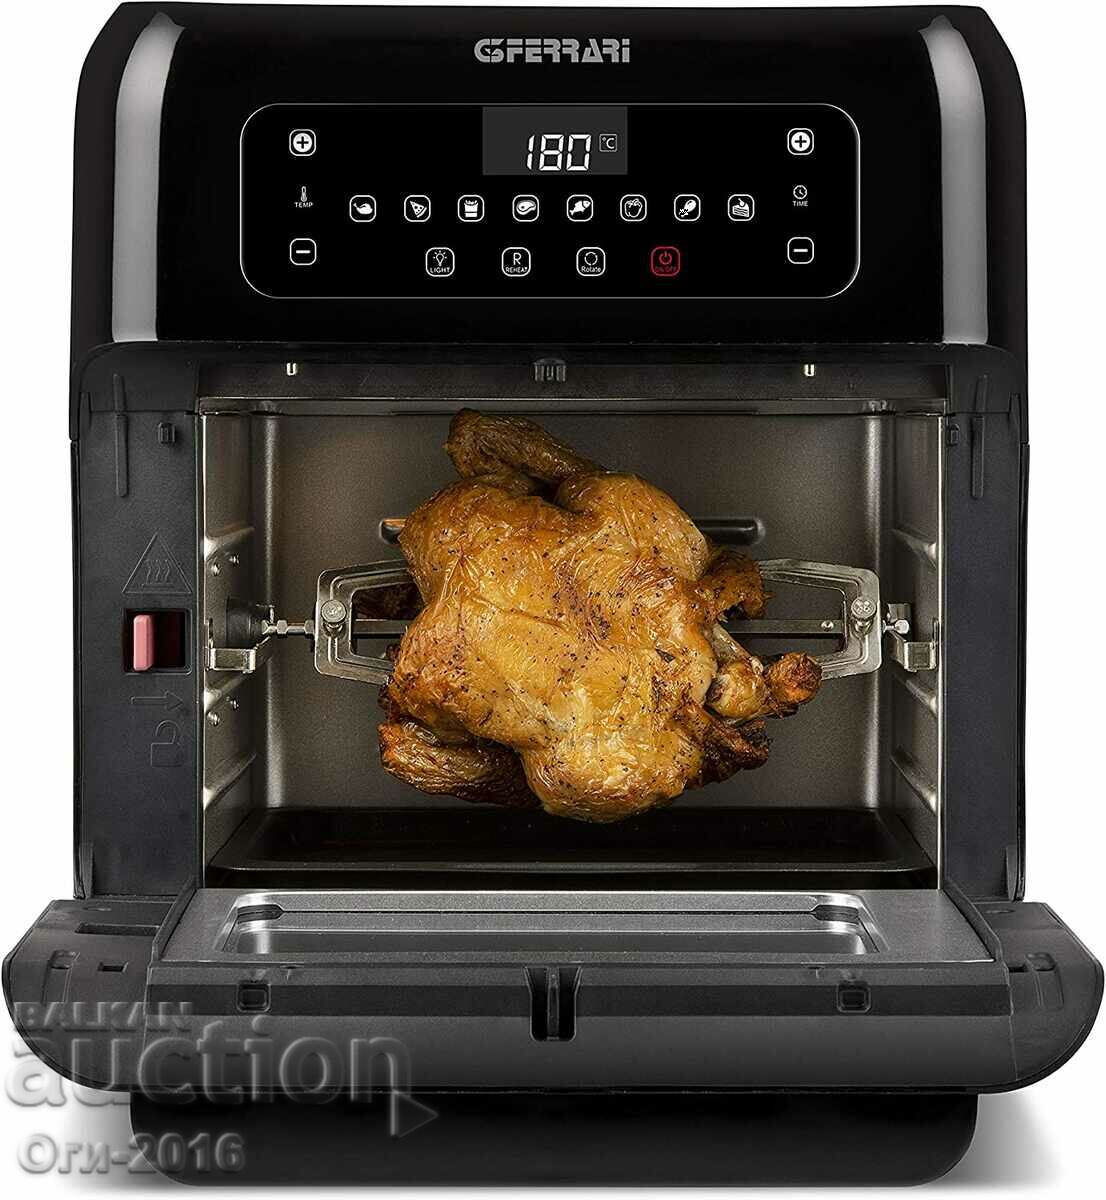 Multi-functional: air fryer, frying, baking, grilling